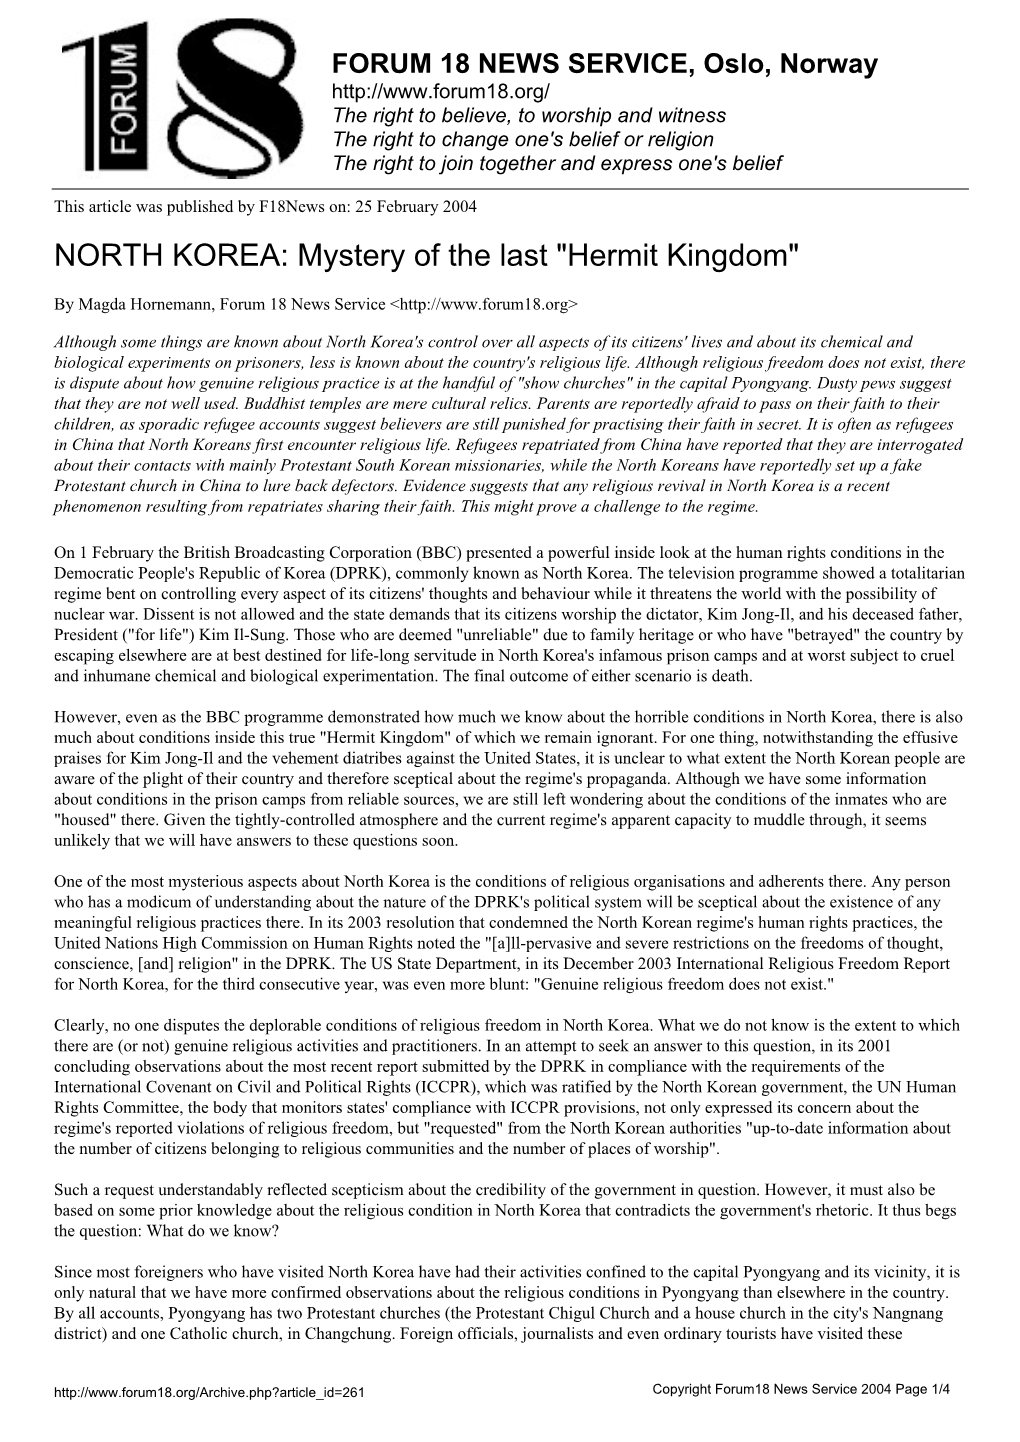 NORTH KOREA: Mystery of the Last "Hermit Kingdom"